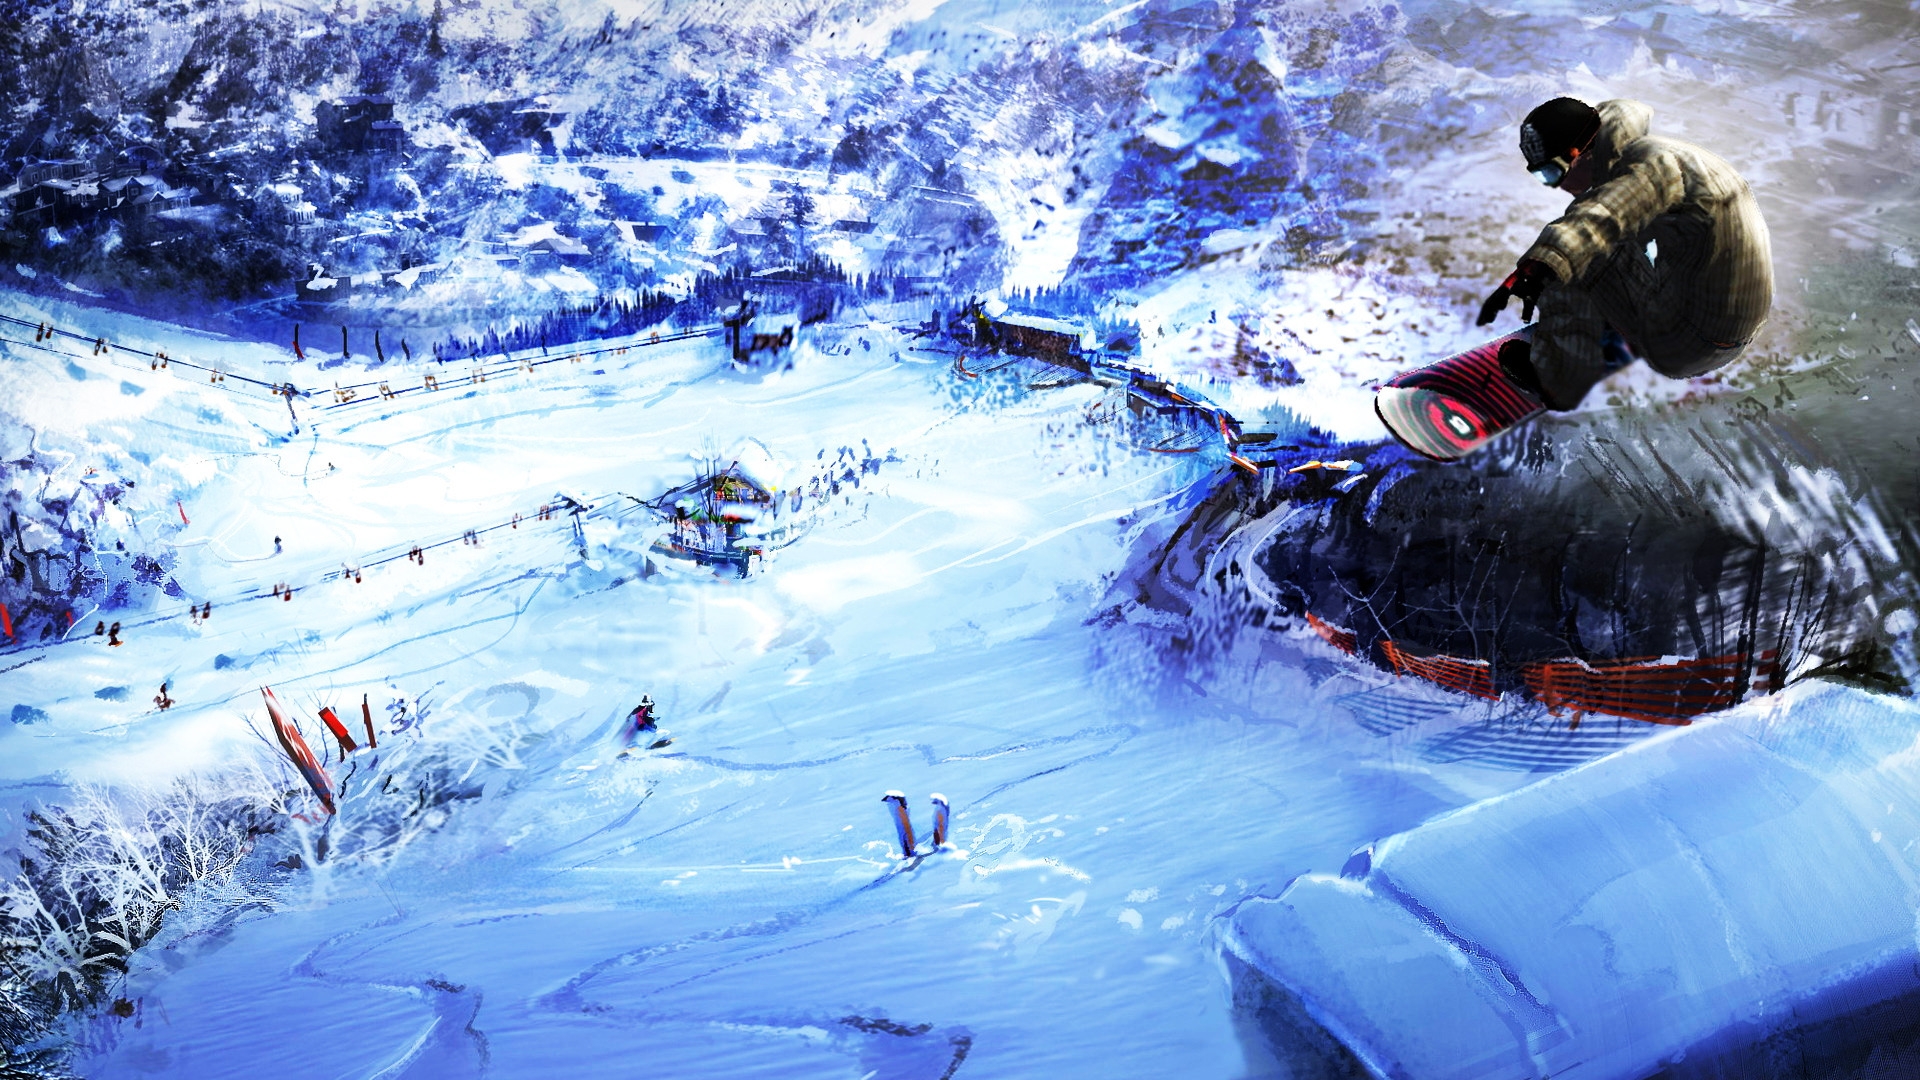 Mountain Snowboarding Sport for 1920 x 1080 HDTV 1080p resolution